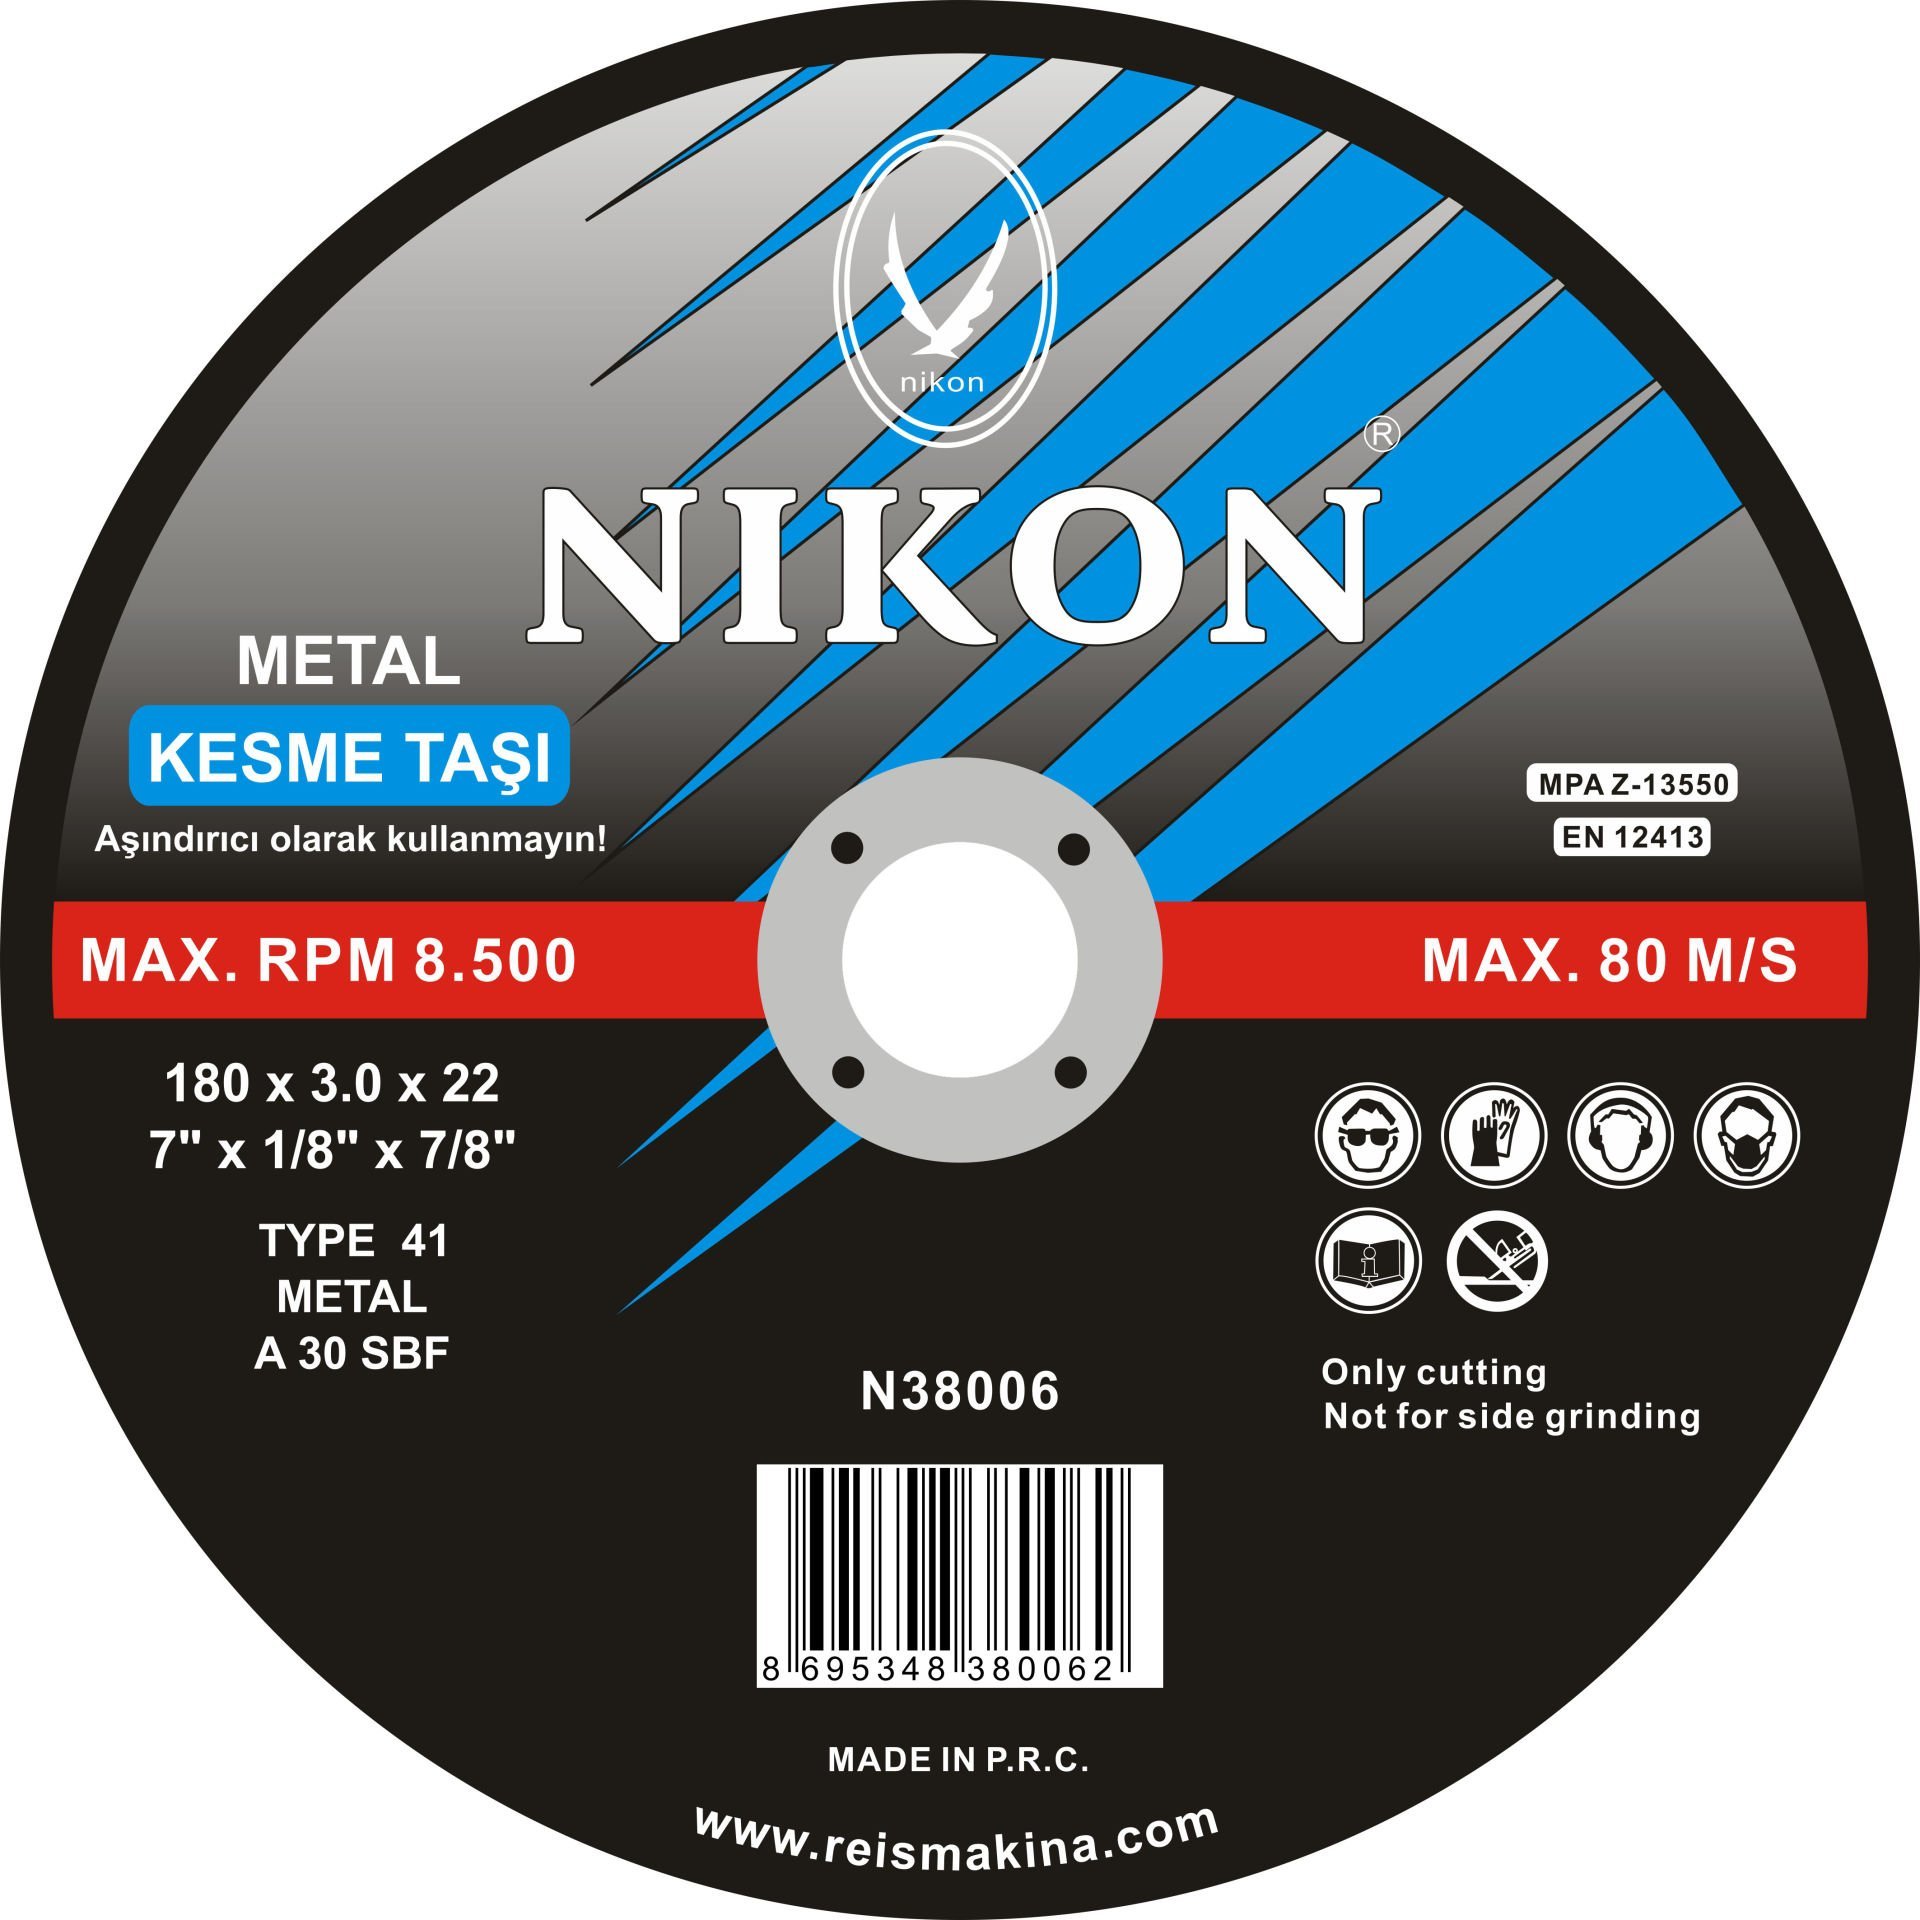 Nikon Metal Flex Kesme Taşı Bombeli 180x3.0x22mm 5 Adet